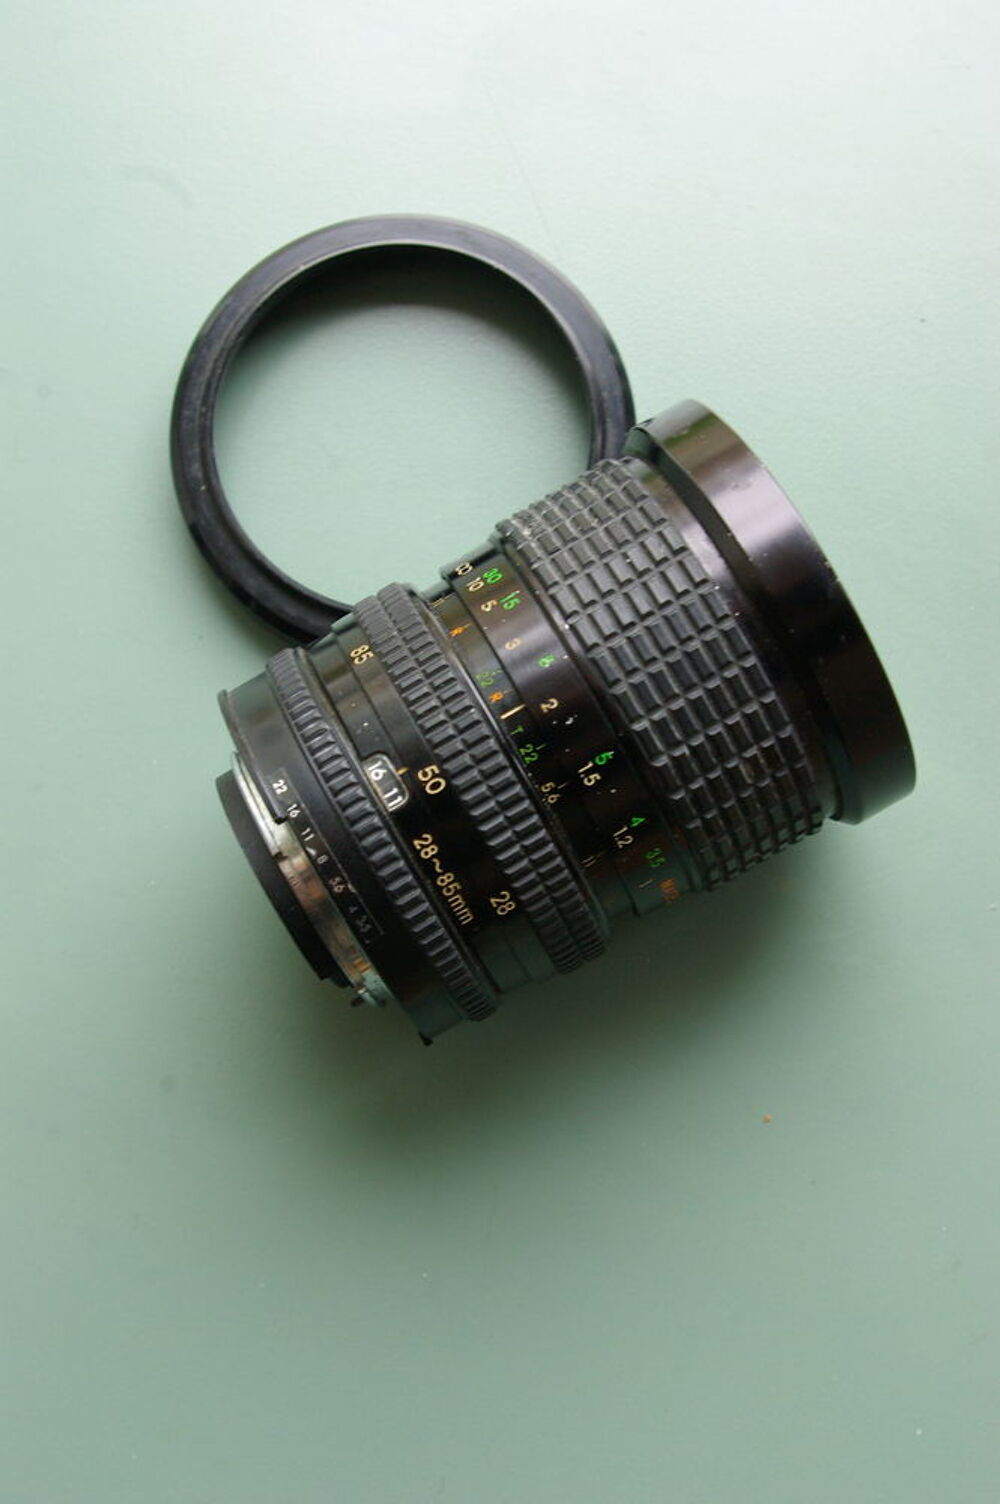  Zoom Sigma 28-85mm - 3.5-4.5 (multi coated) Photos/Video/TV